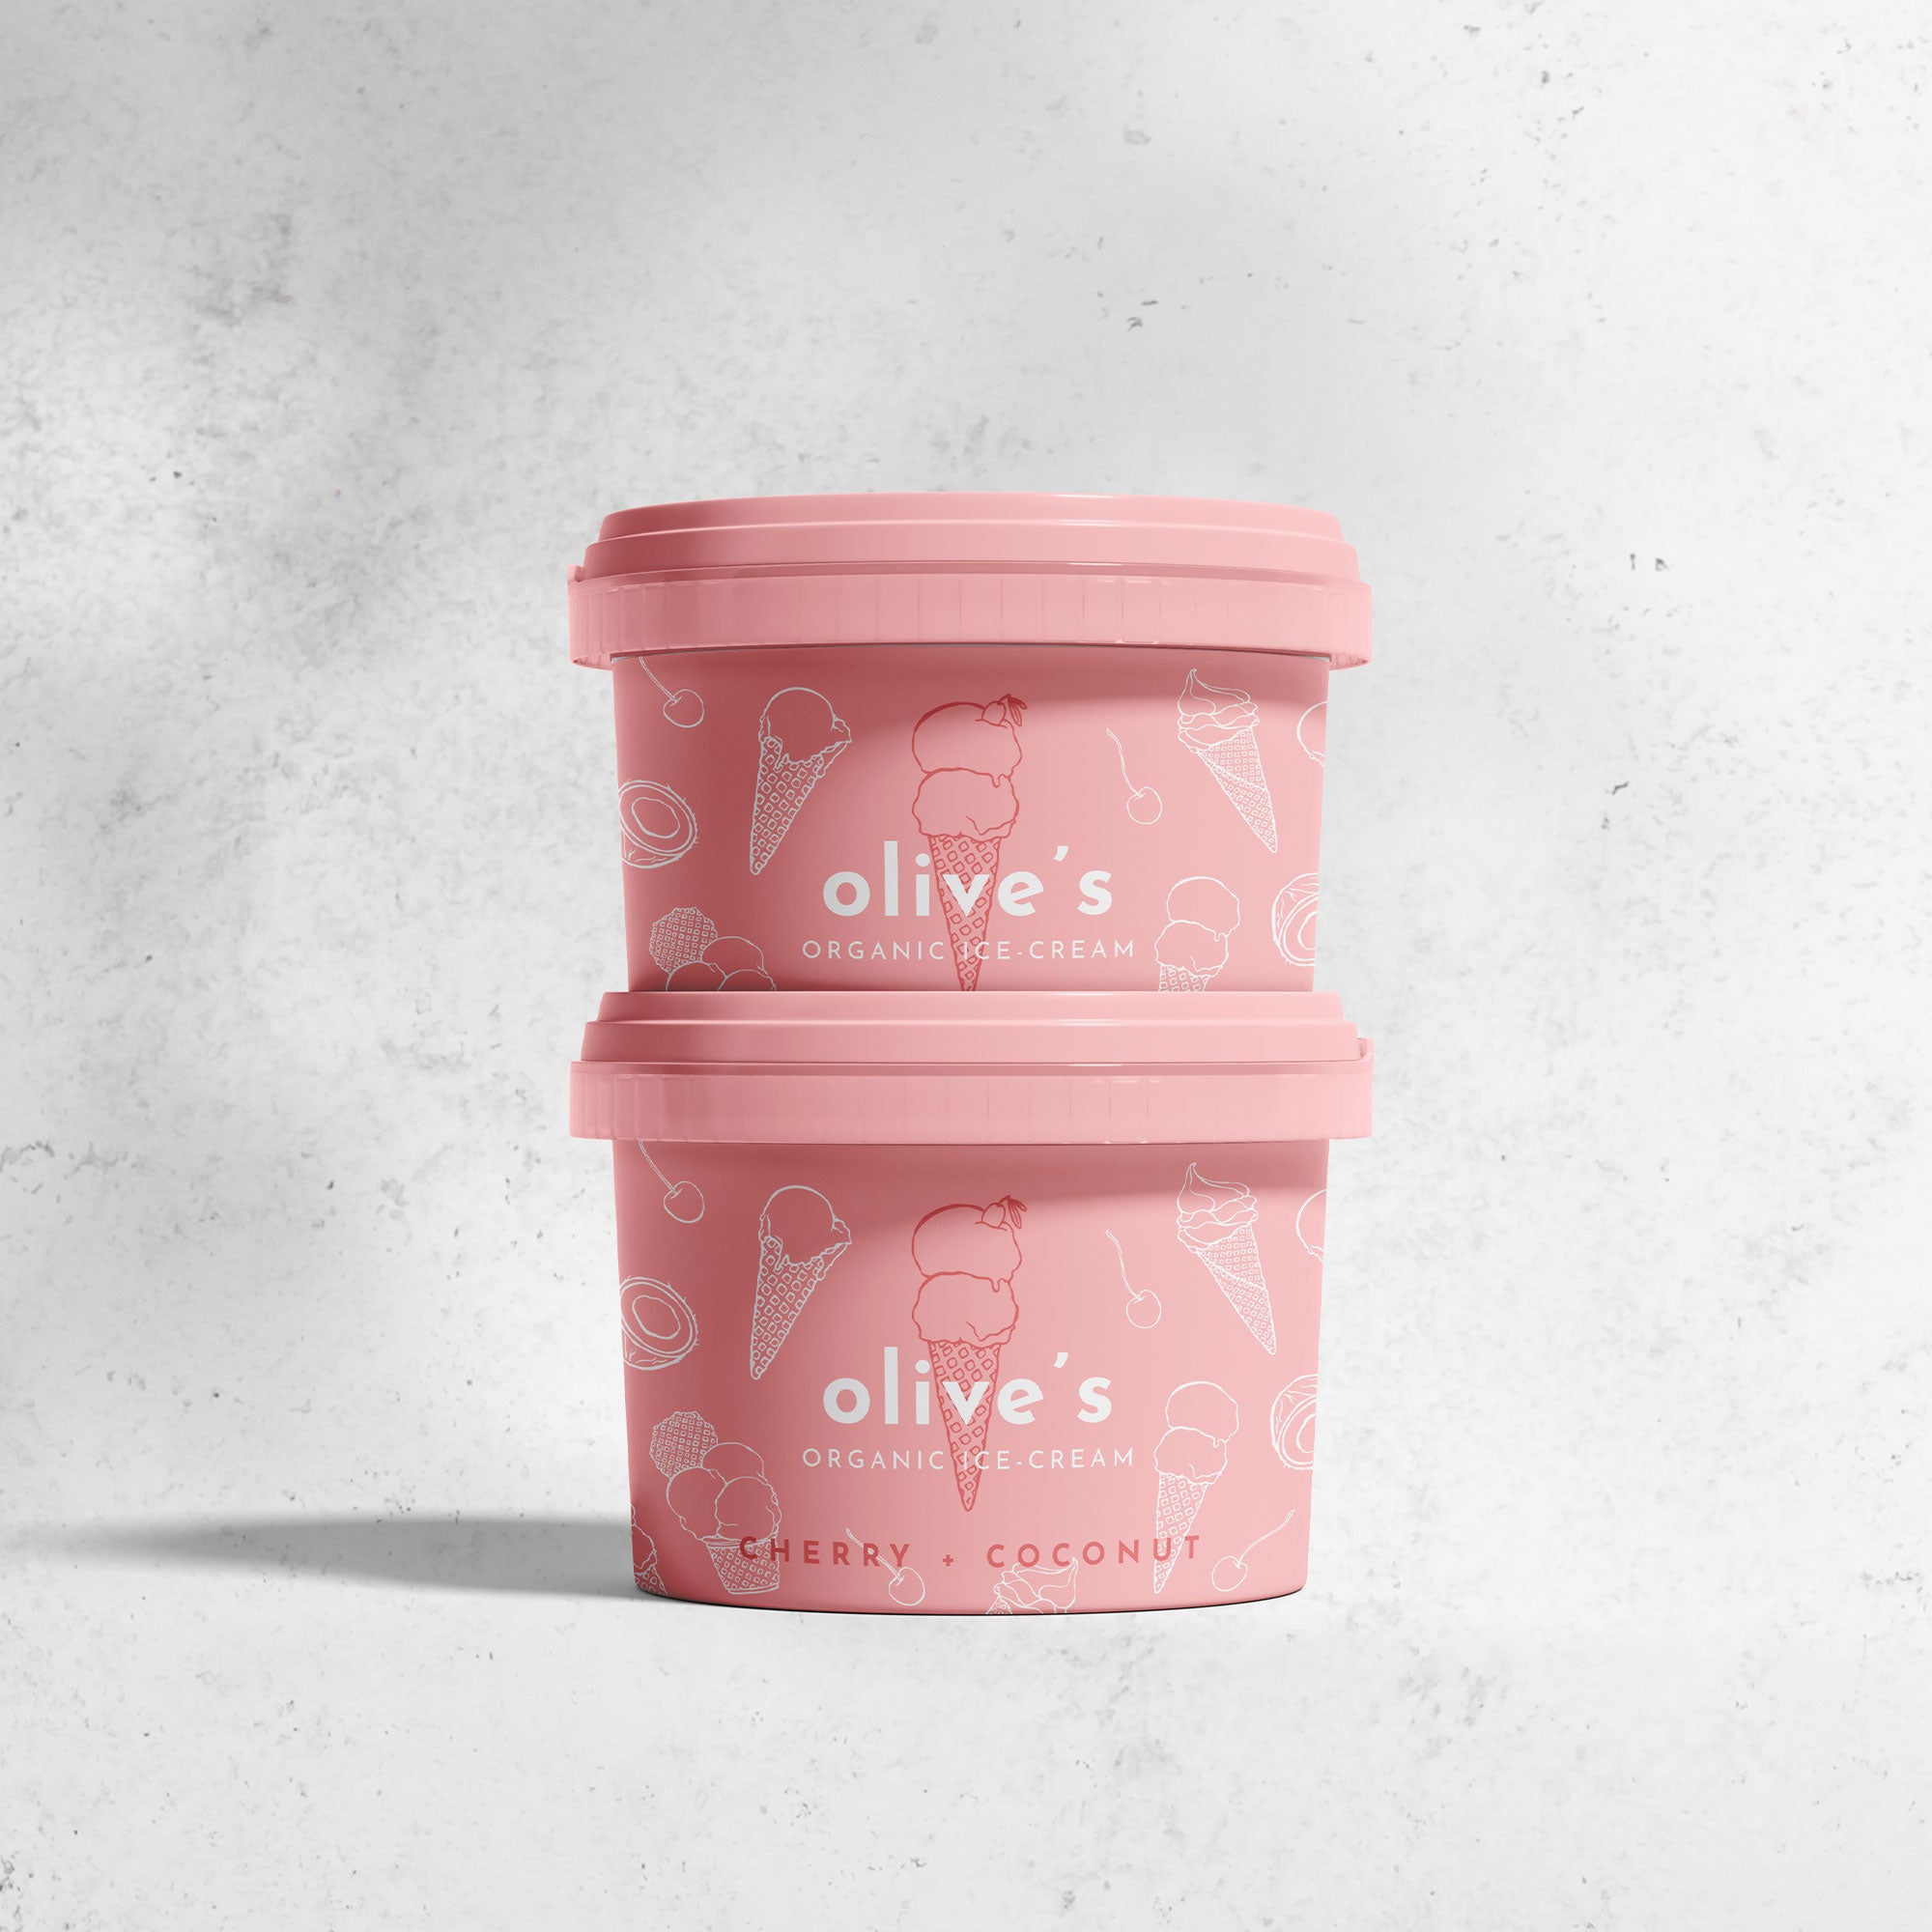 Karolina Król Studio minimalist organic ice cream branding packaging design